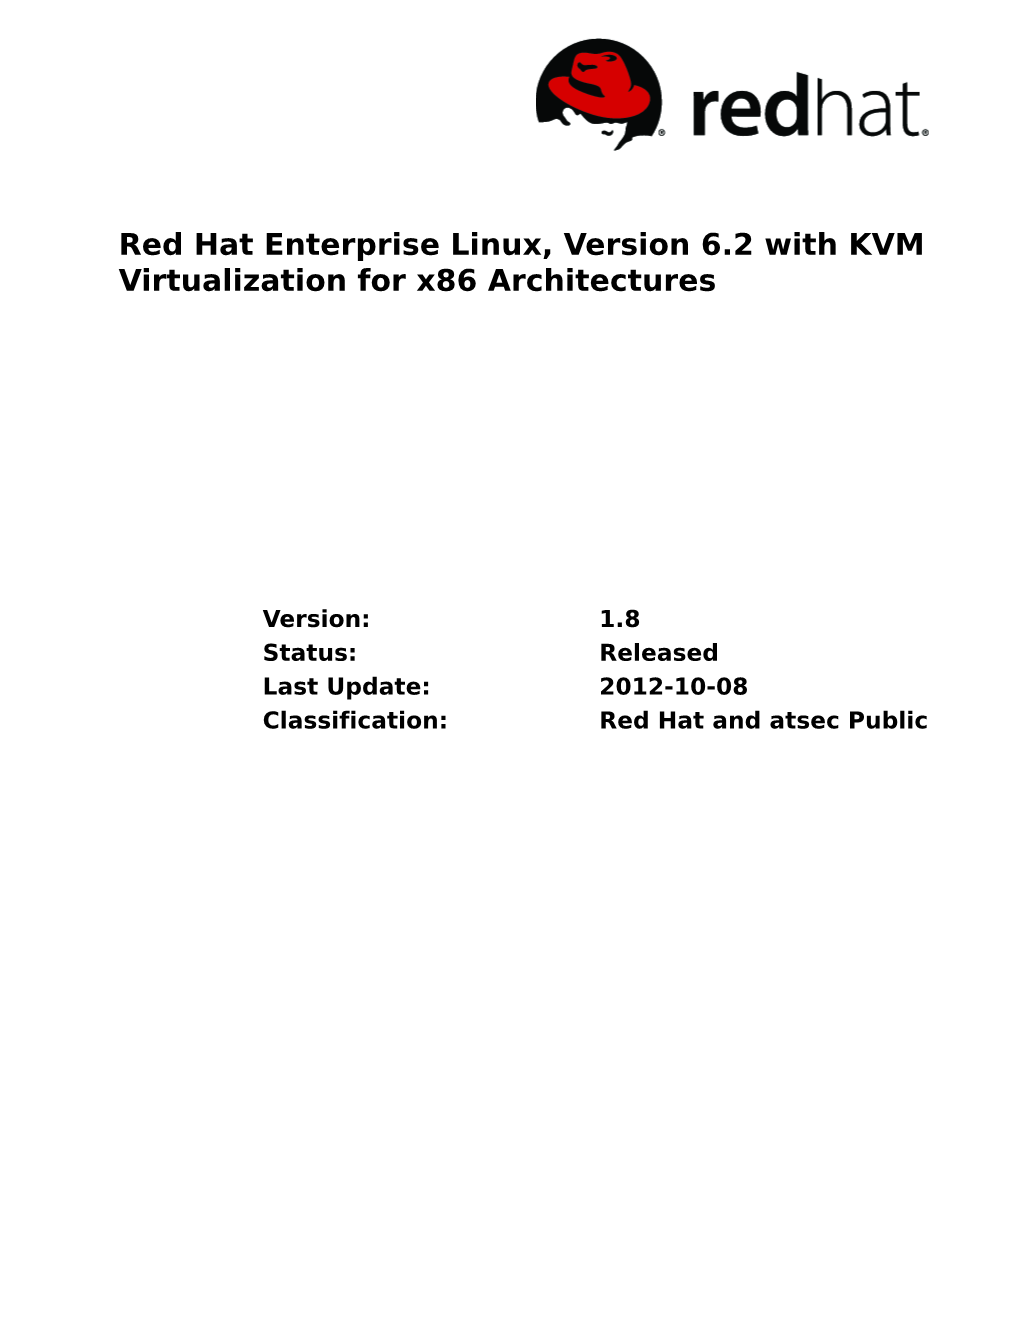 Red Hat Enterprise Linux, Version 6.2 with KVM Virtualization for X86 Architectures